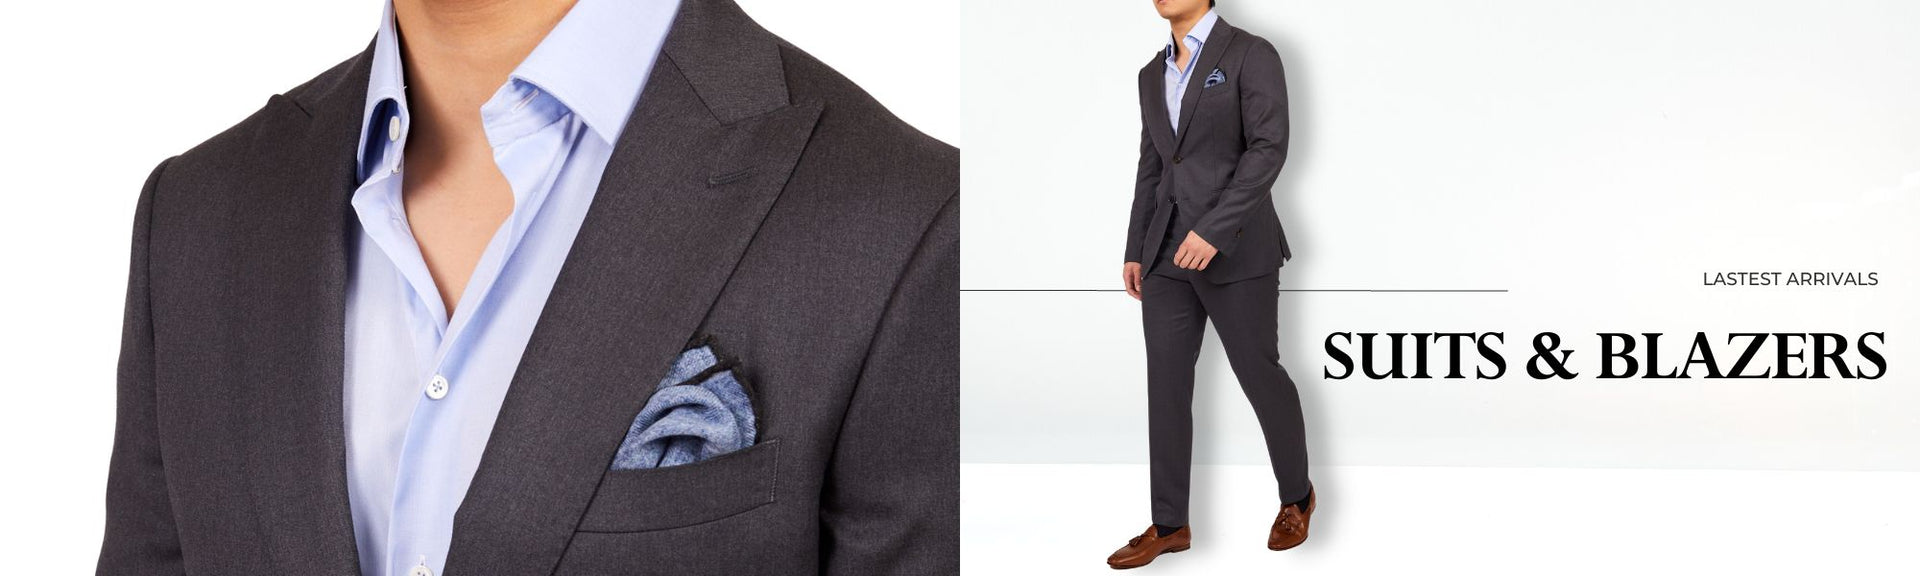 Suits & Blazers - New Arrivals